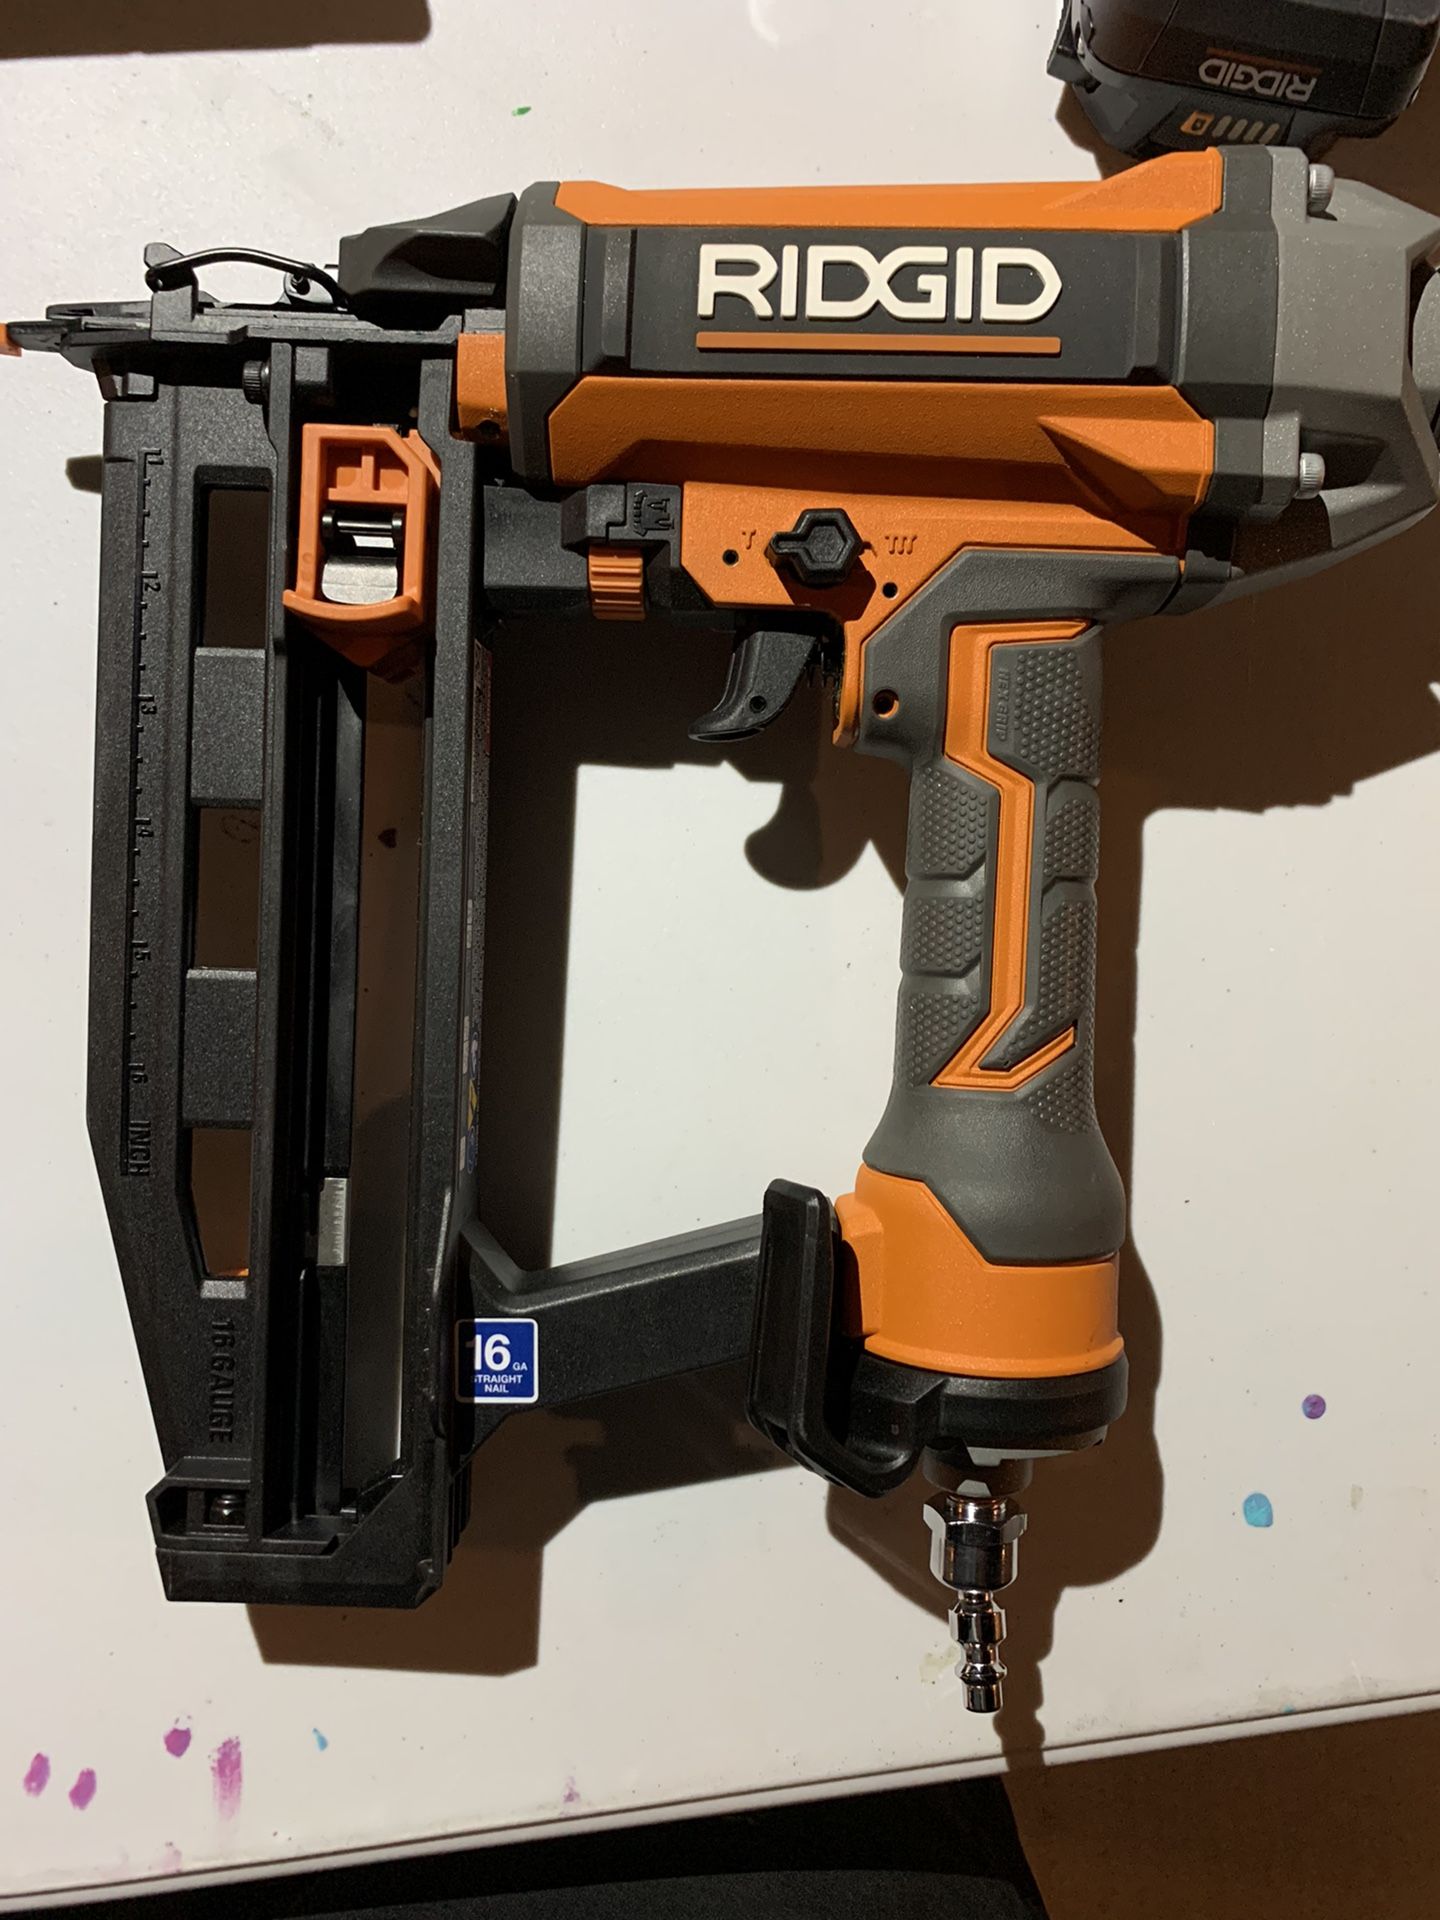 Rigid 16g Framing Nail Gun